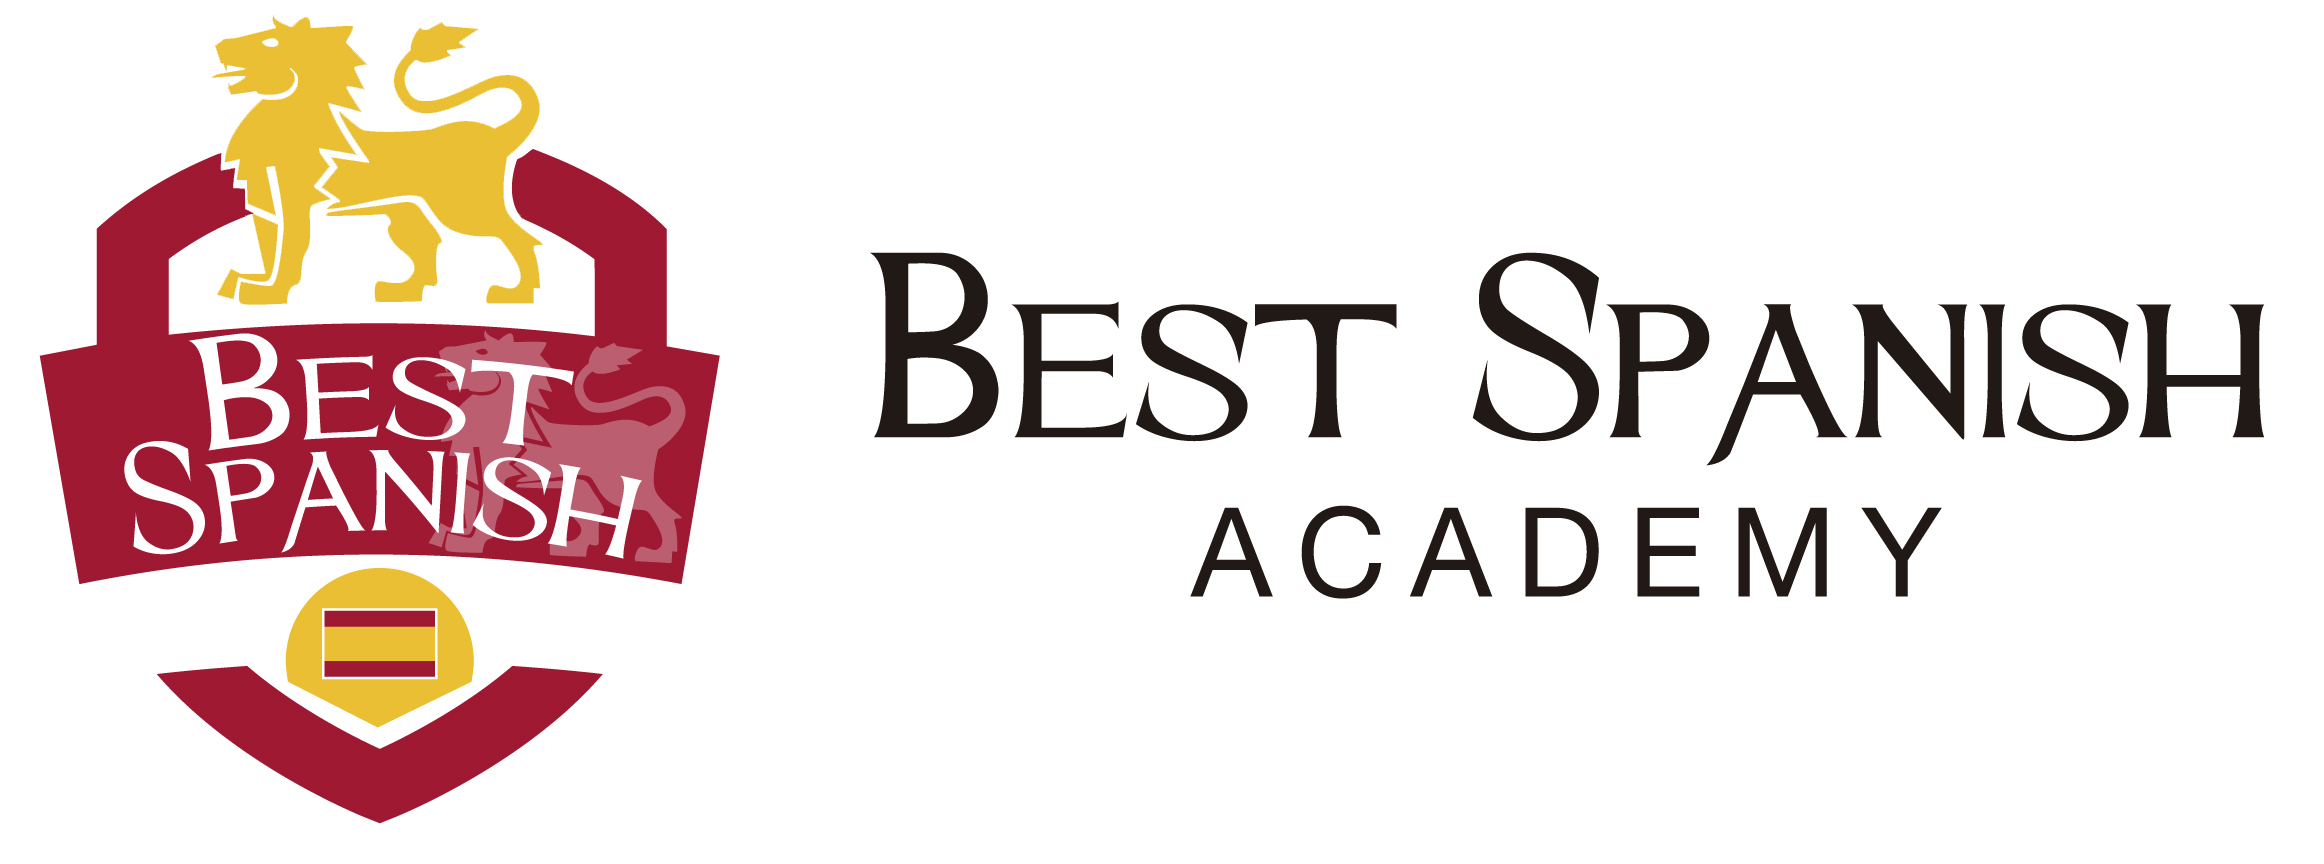 Best Spanish Academy